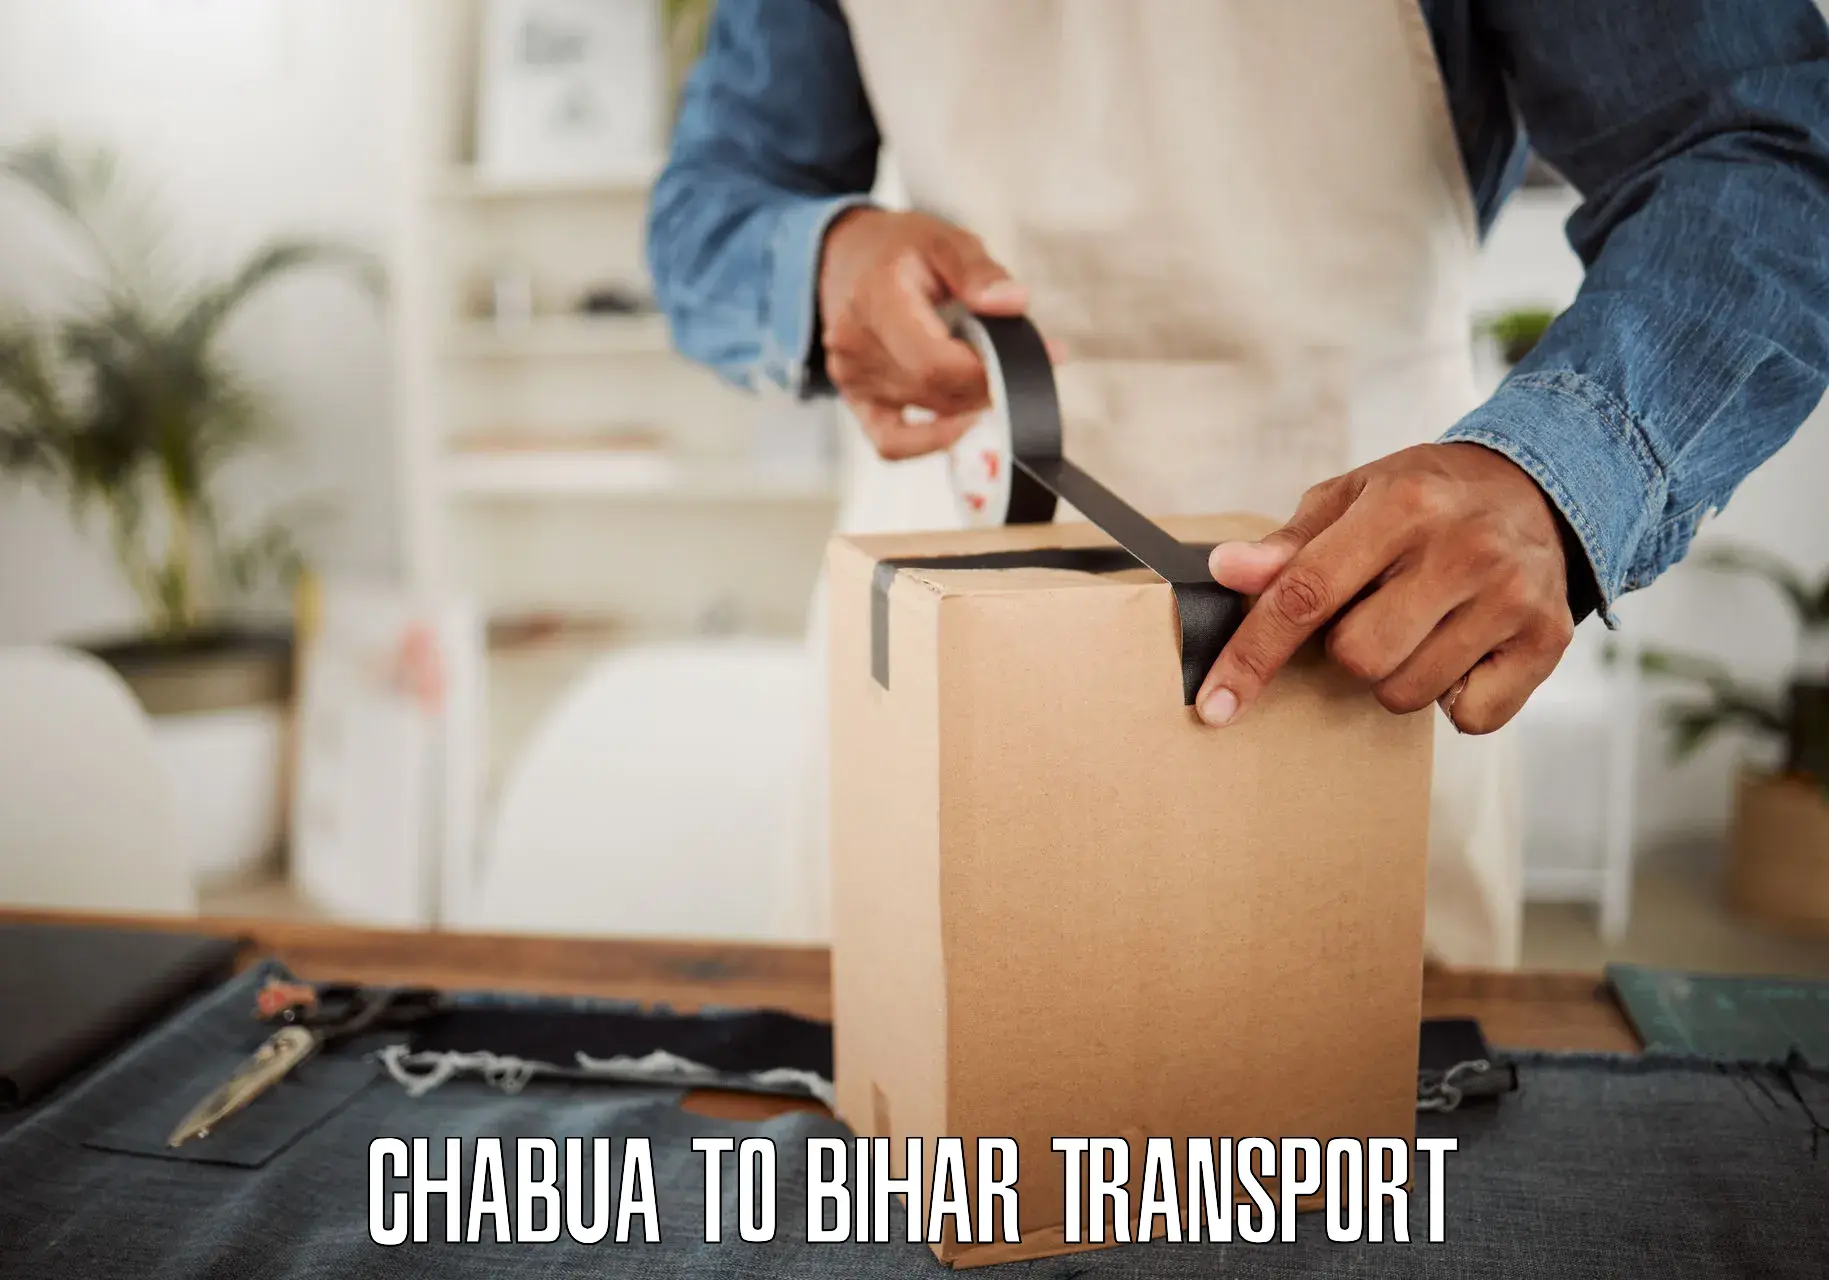 Furniture transport service in Chabua to Mairwa